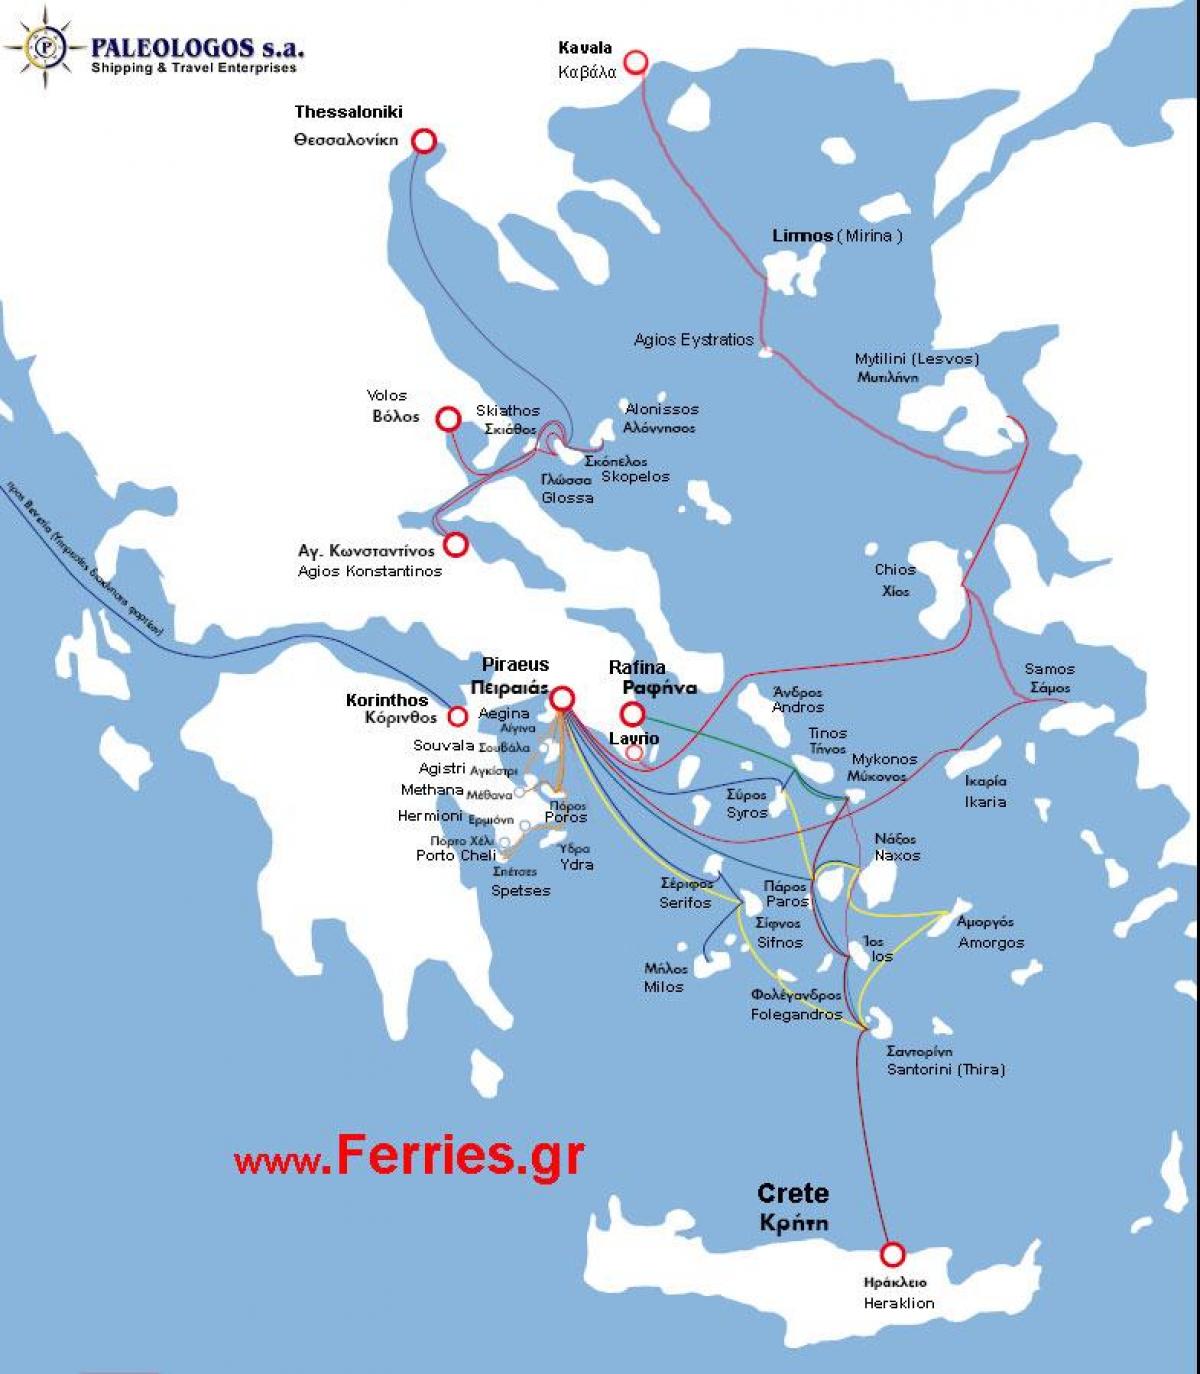 kaart van Athene ferry